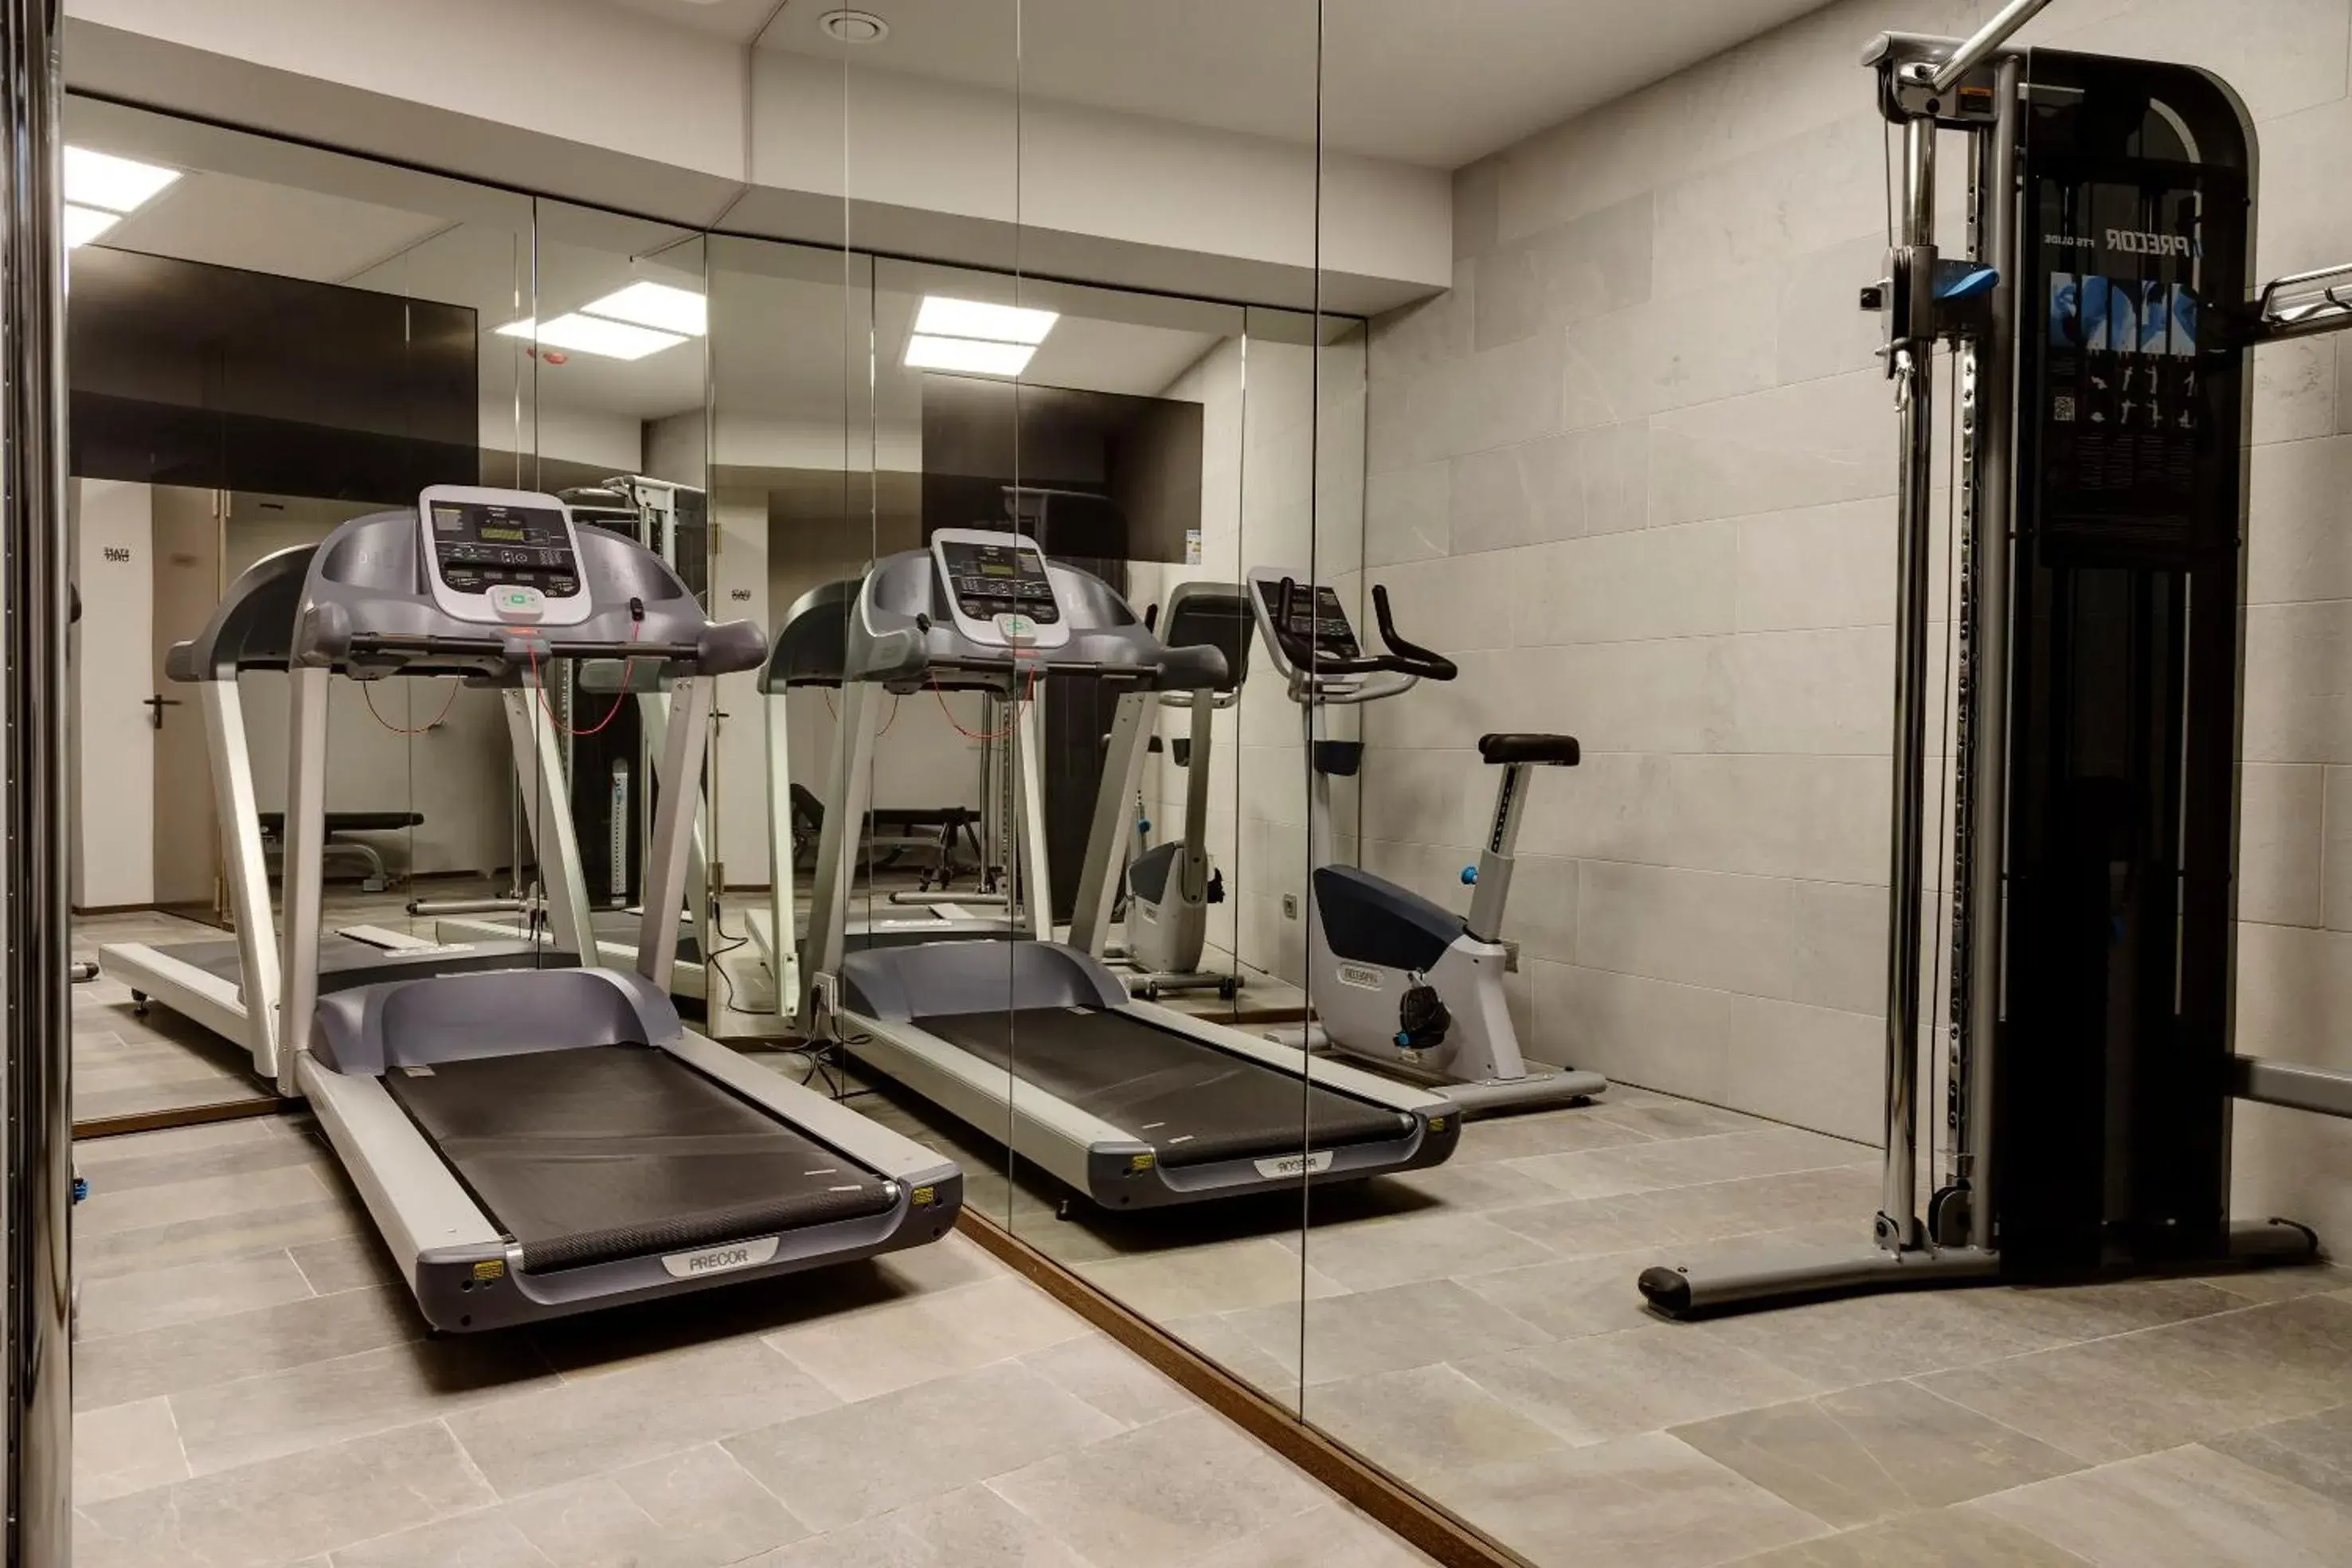 Fitness centre/facilities, Fitness Center/Facilities in Grand Hotel Campione